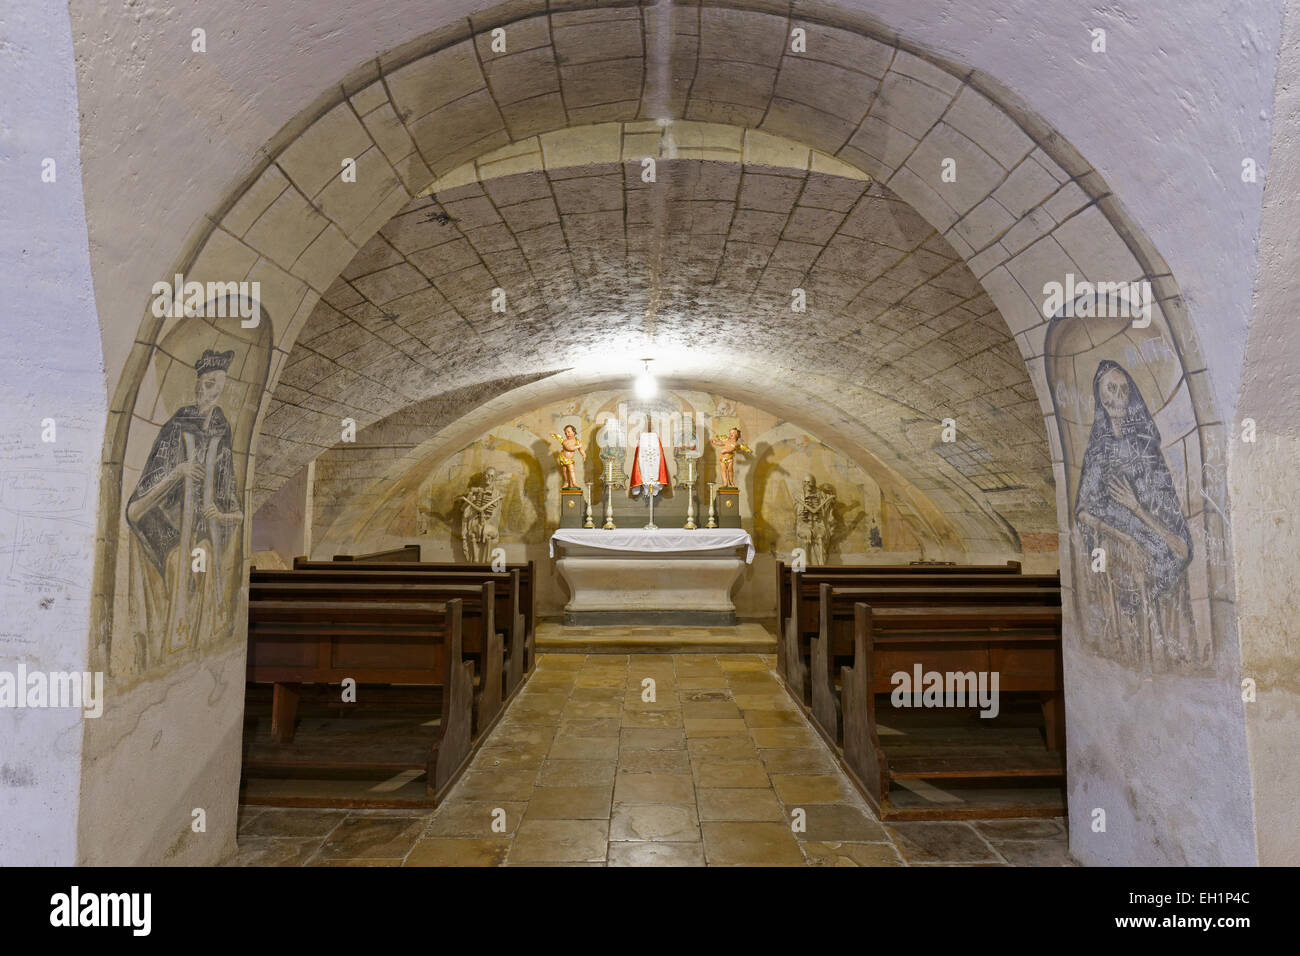 Cripta familiar fotografías e imágenes de alta resolución - Alamy